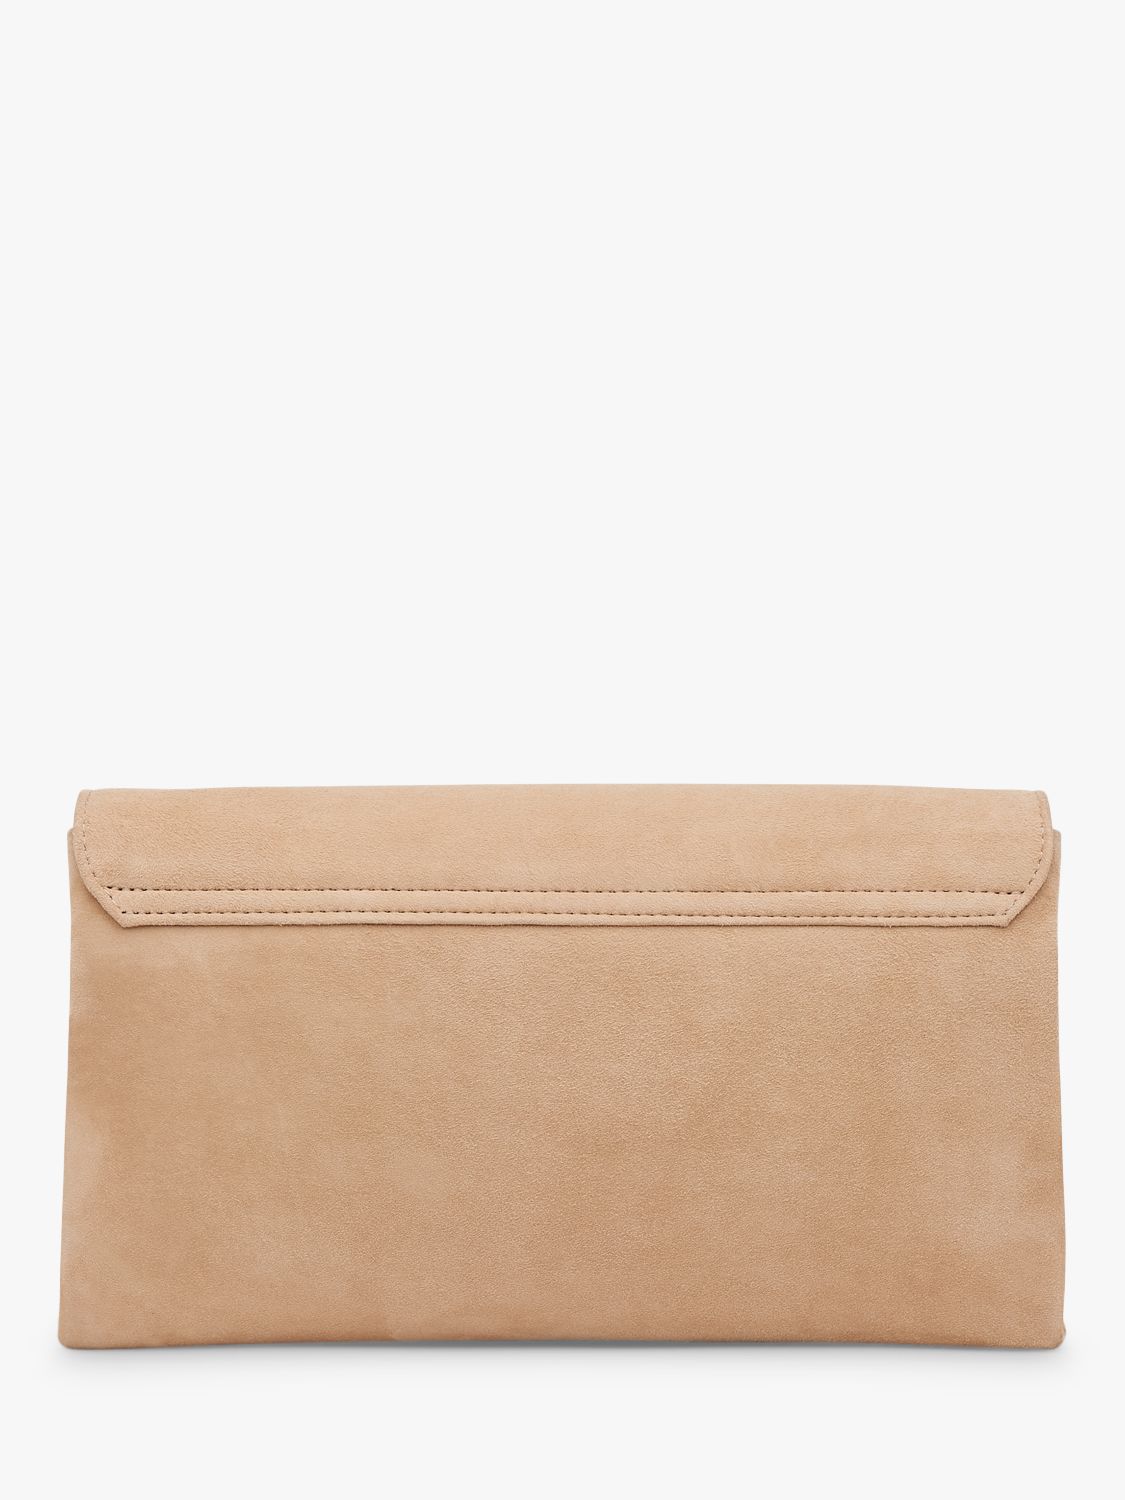 L.K.Bennett Dora Leather Clutch Bag, Brown